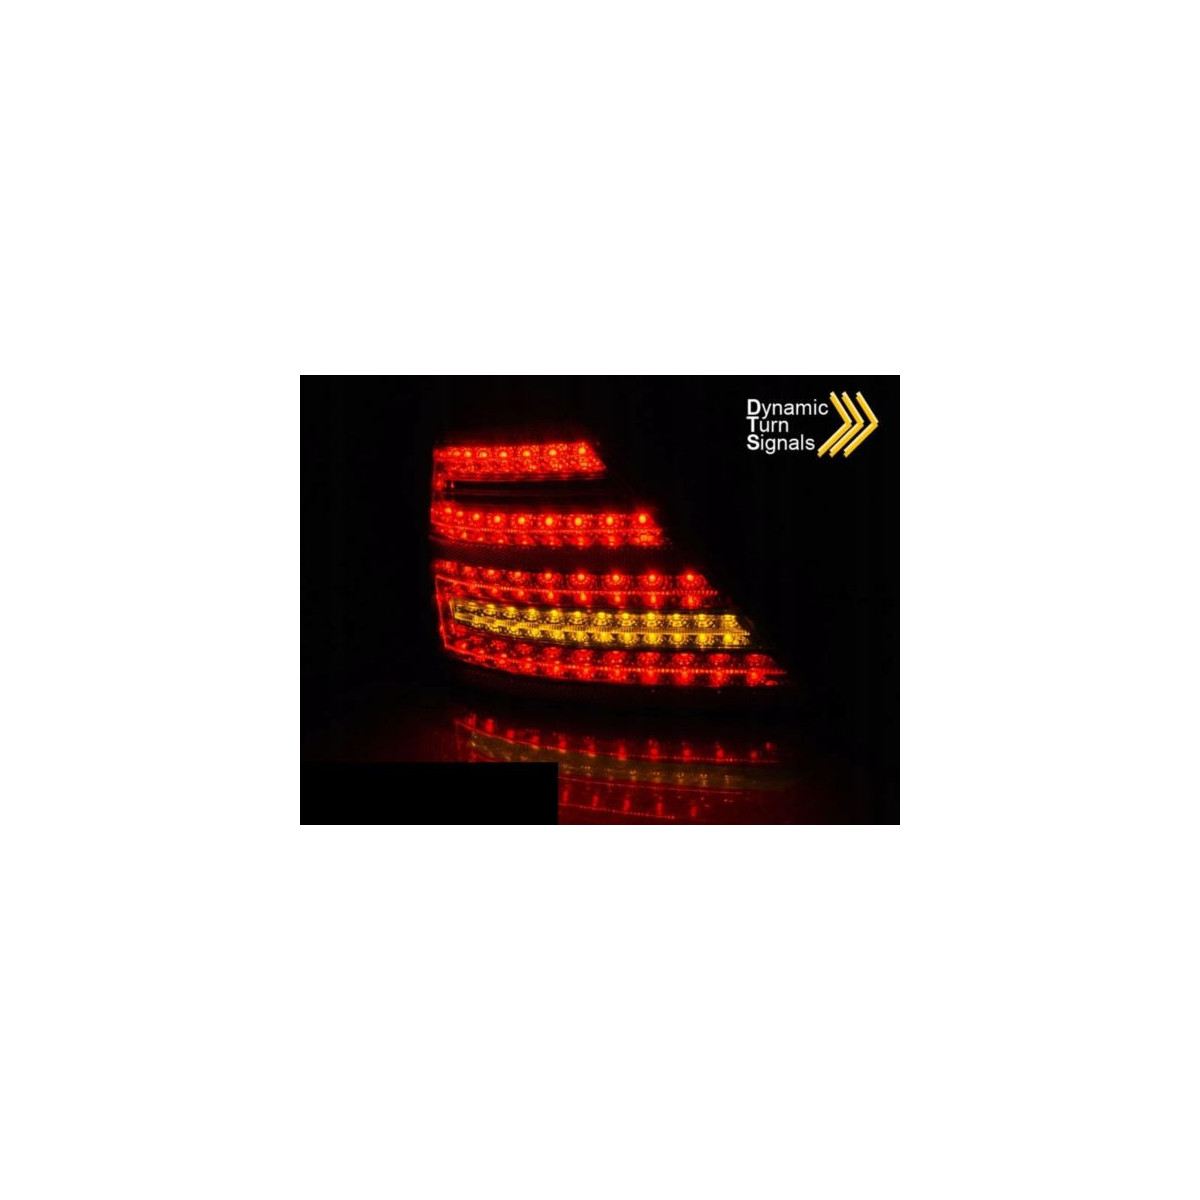 LAMPY MERCEDES W221 S-KL 05-09 RED SMOKE LED SEQ